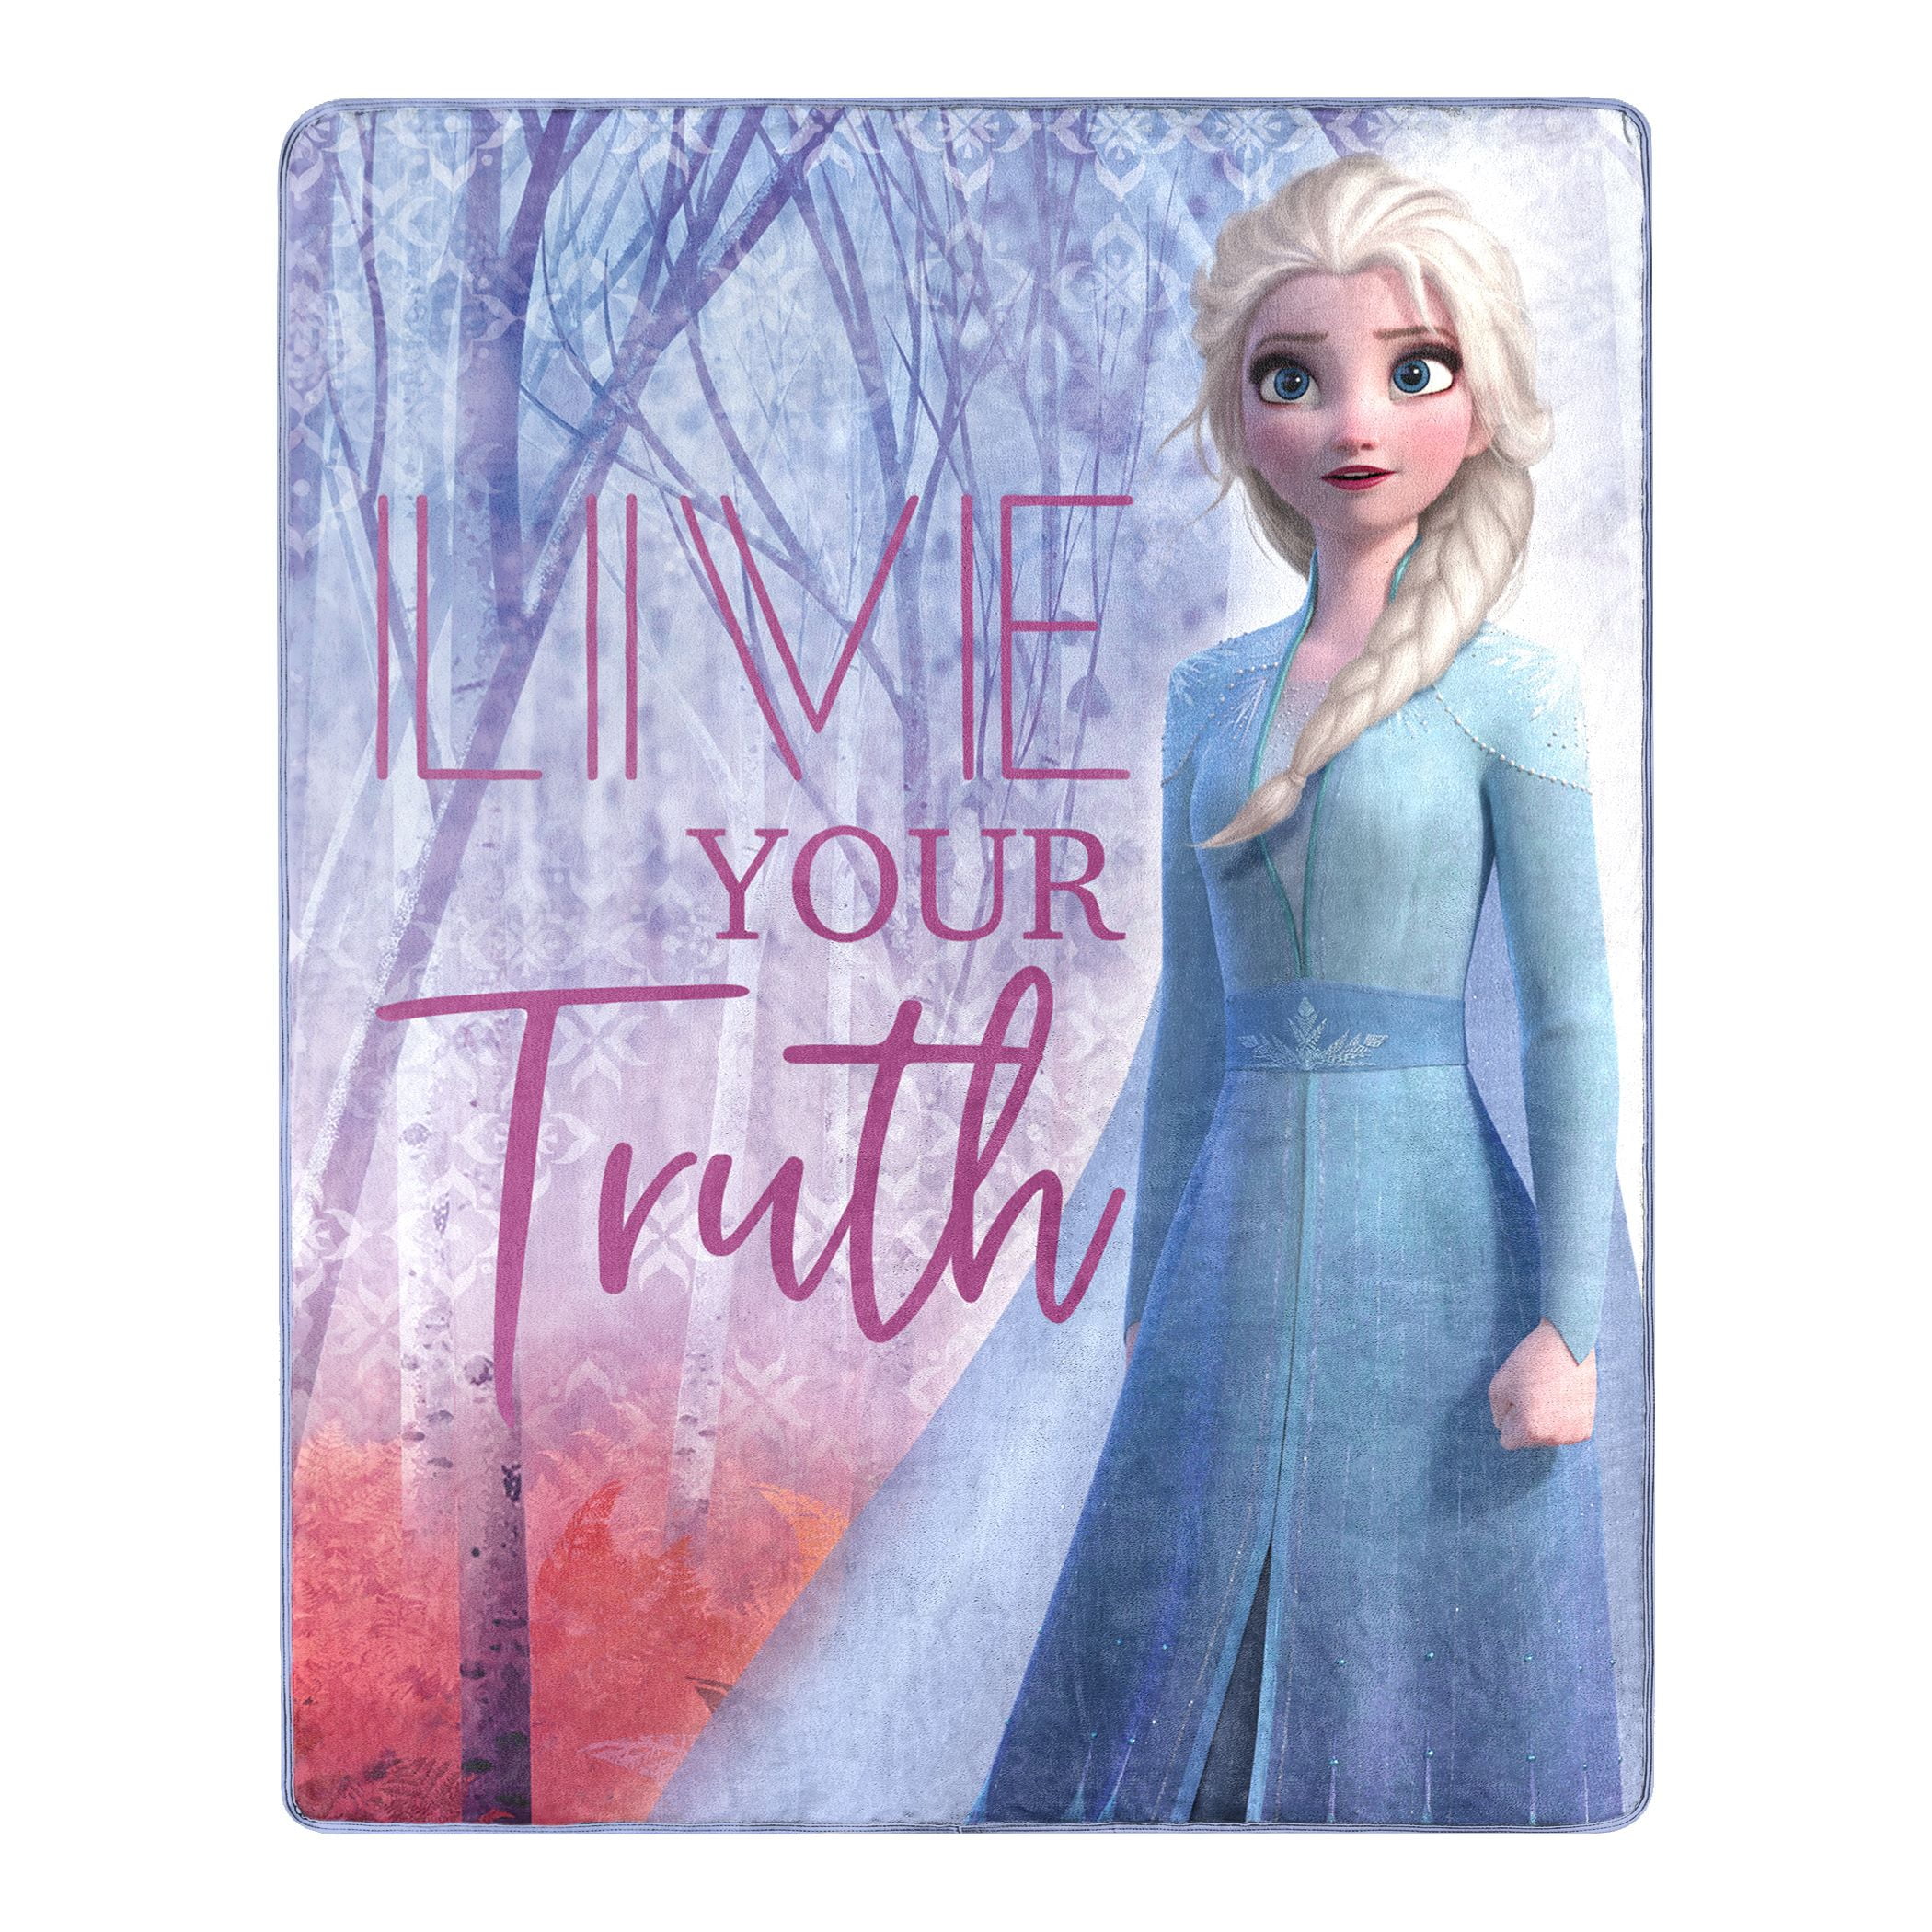 Magical Girls Silk Touch Throw Blanket Disney Frozen 2 40 x 50